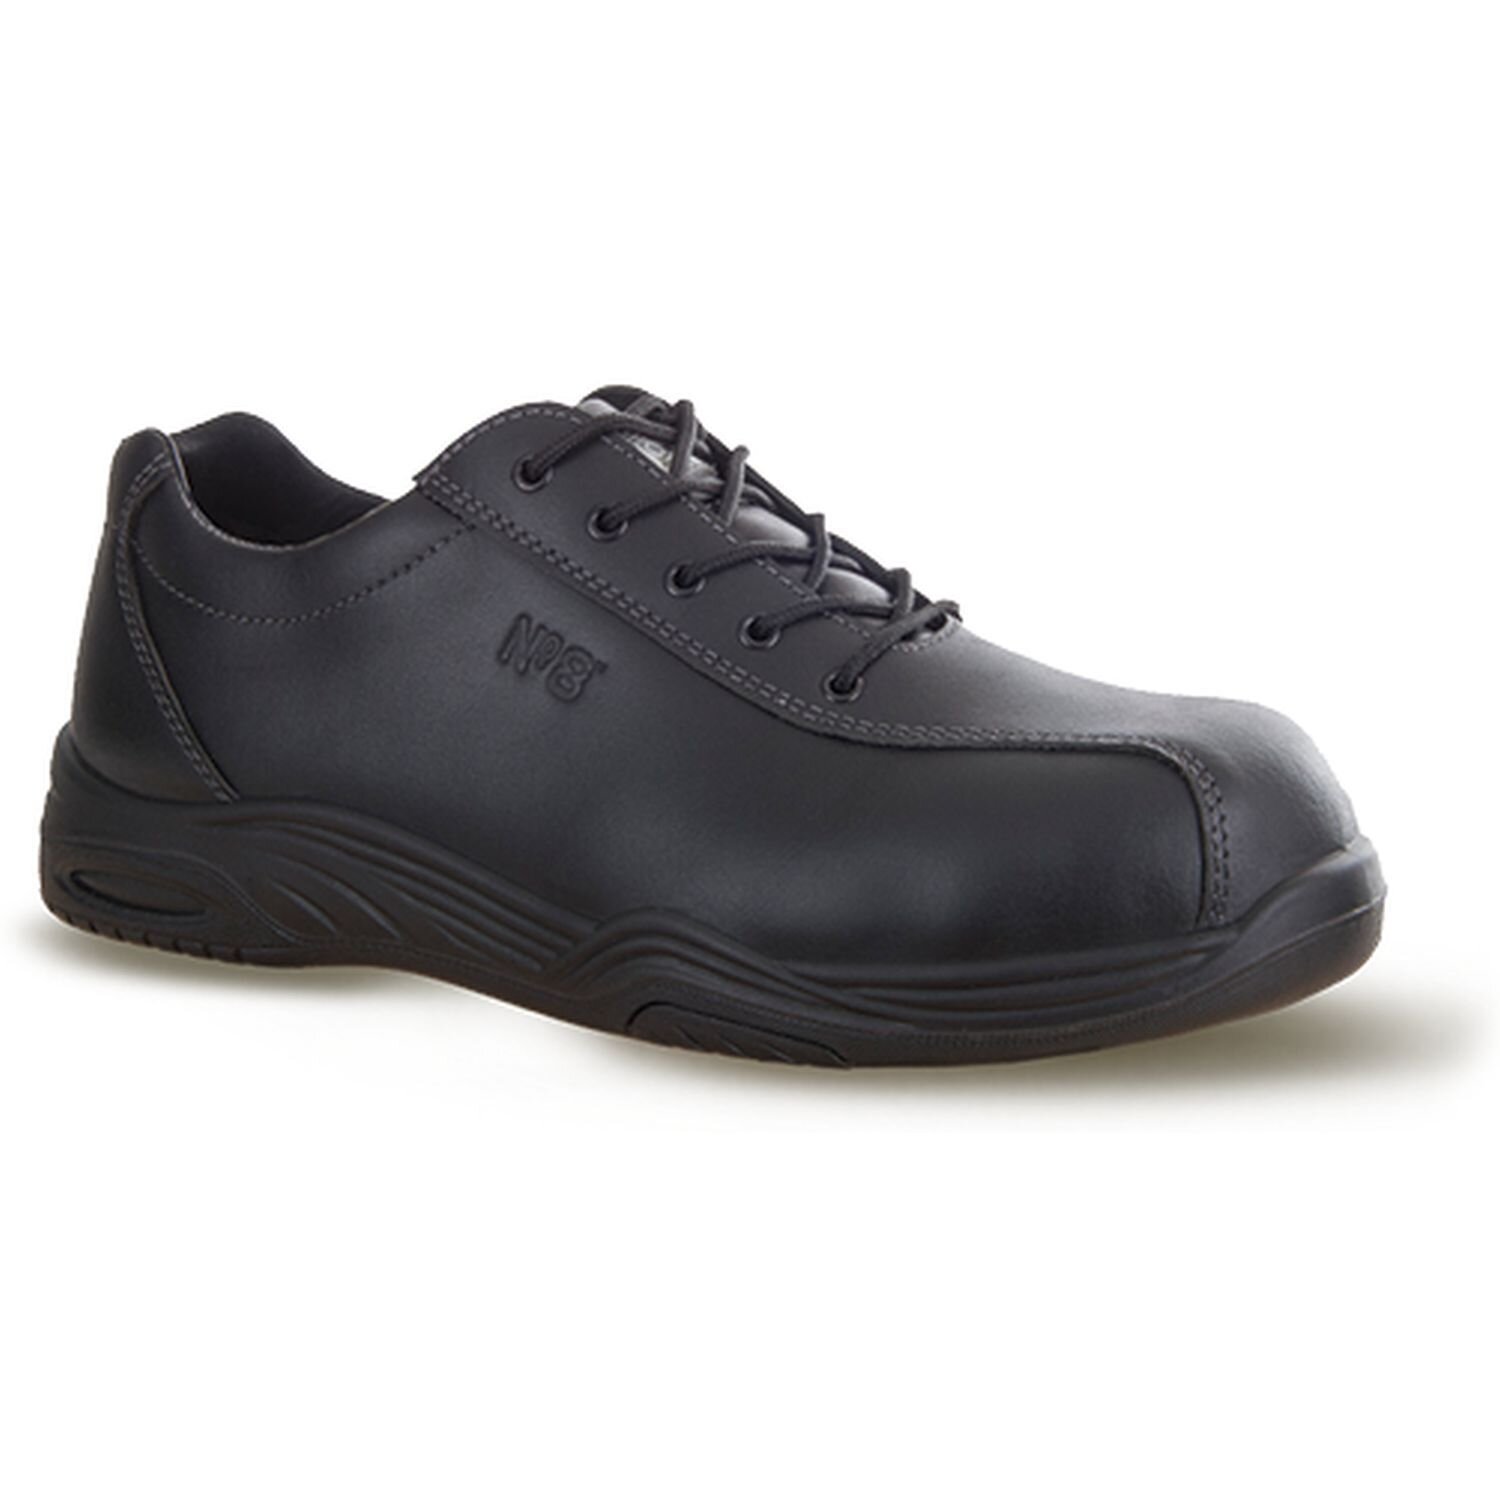 No8 Britten MK11 Lace Up Composite Toe Safety Shoe Black